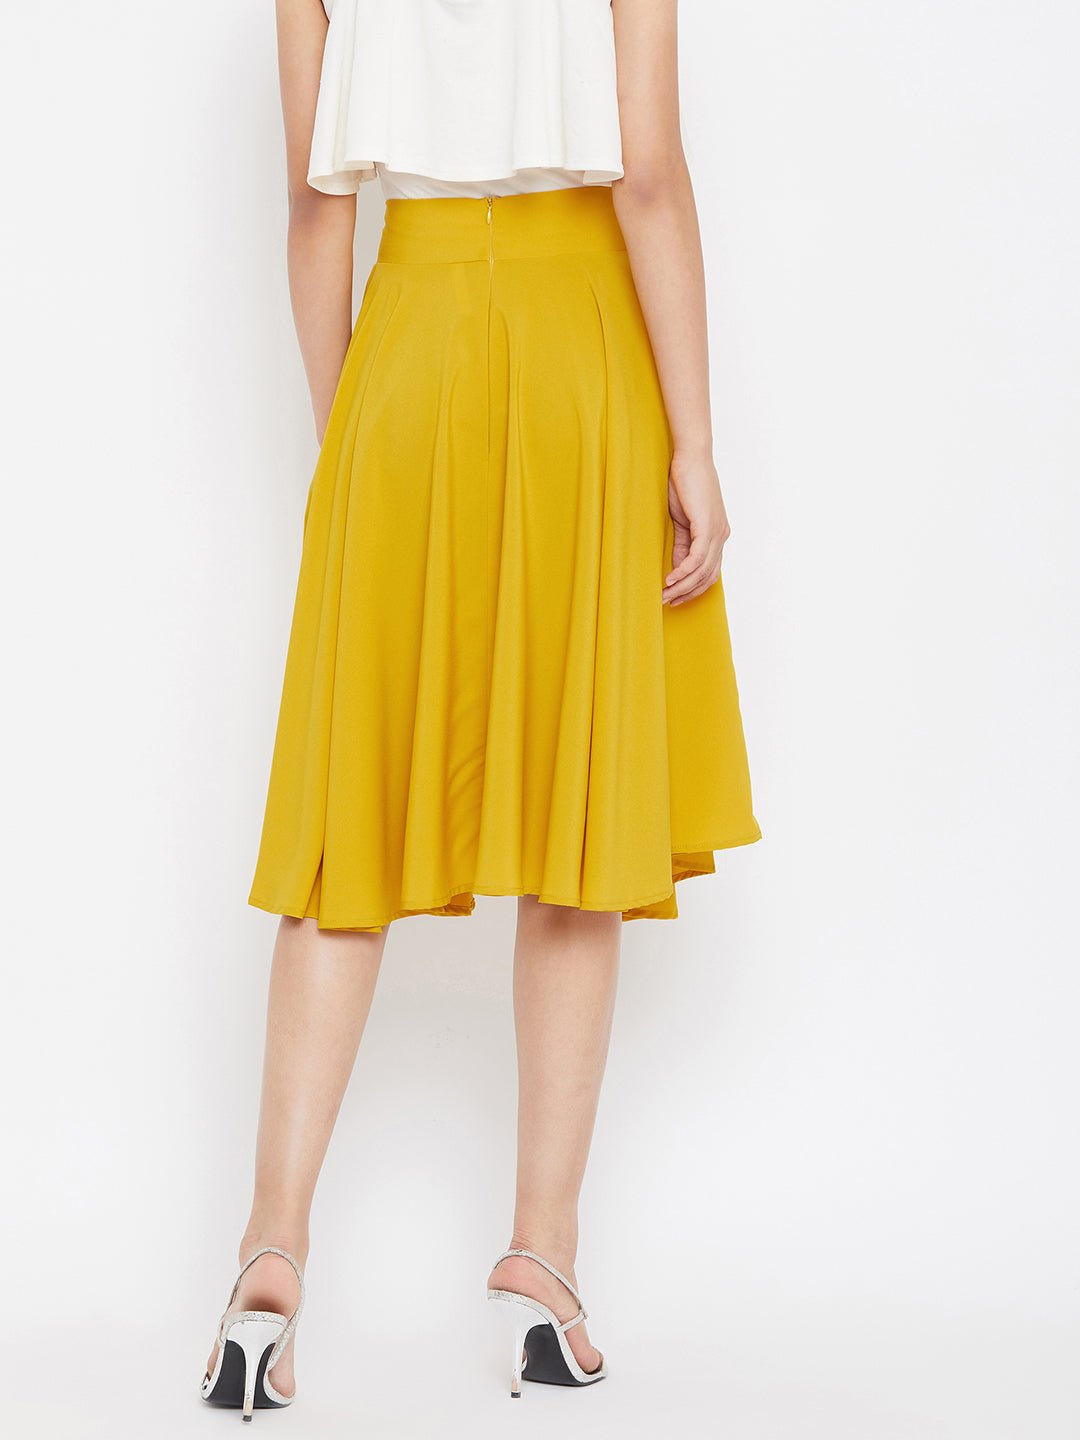 Folk Republic Women Solid Yellow High-Rise Flared Midi Skirt - #folk republic#